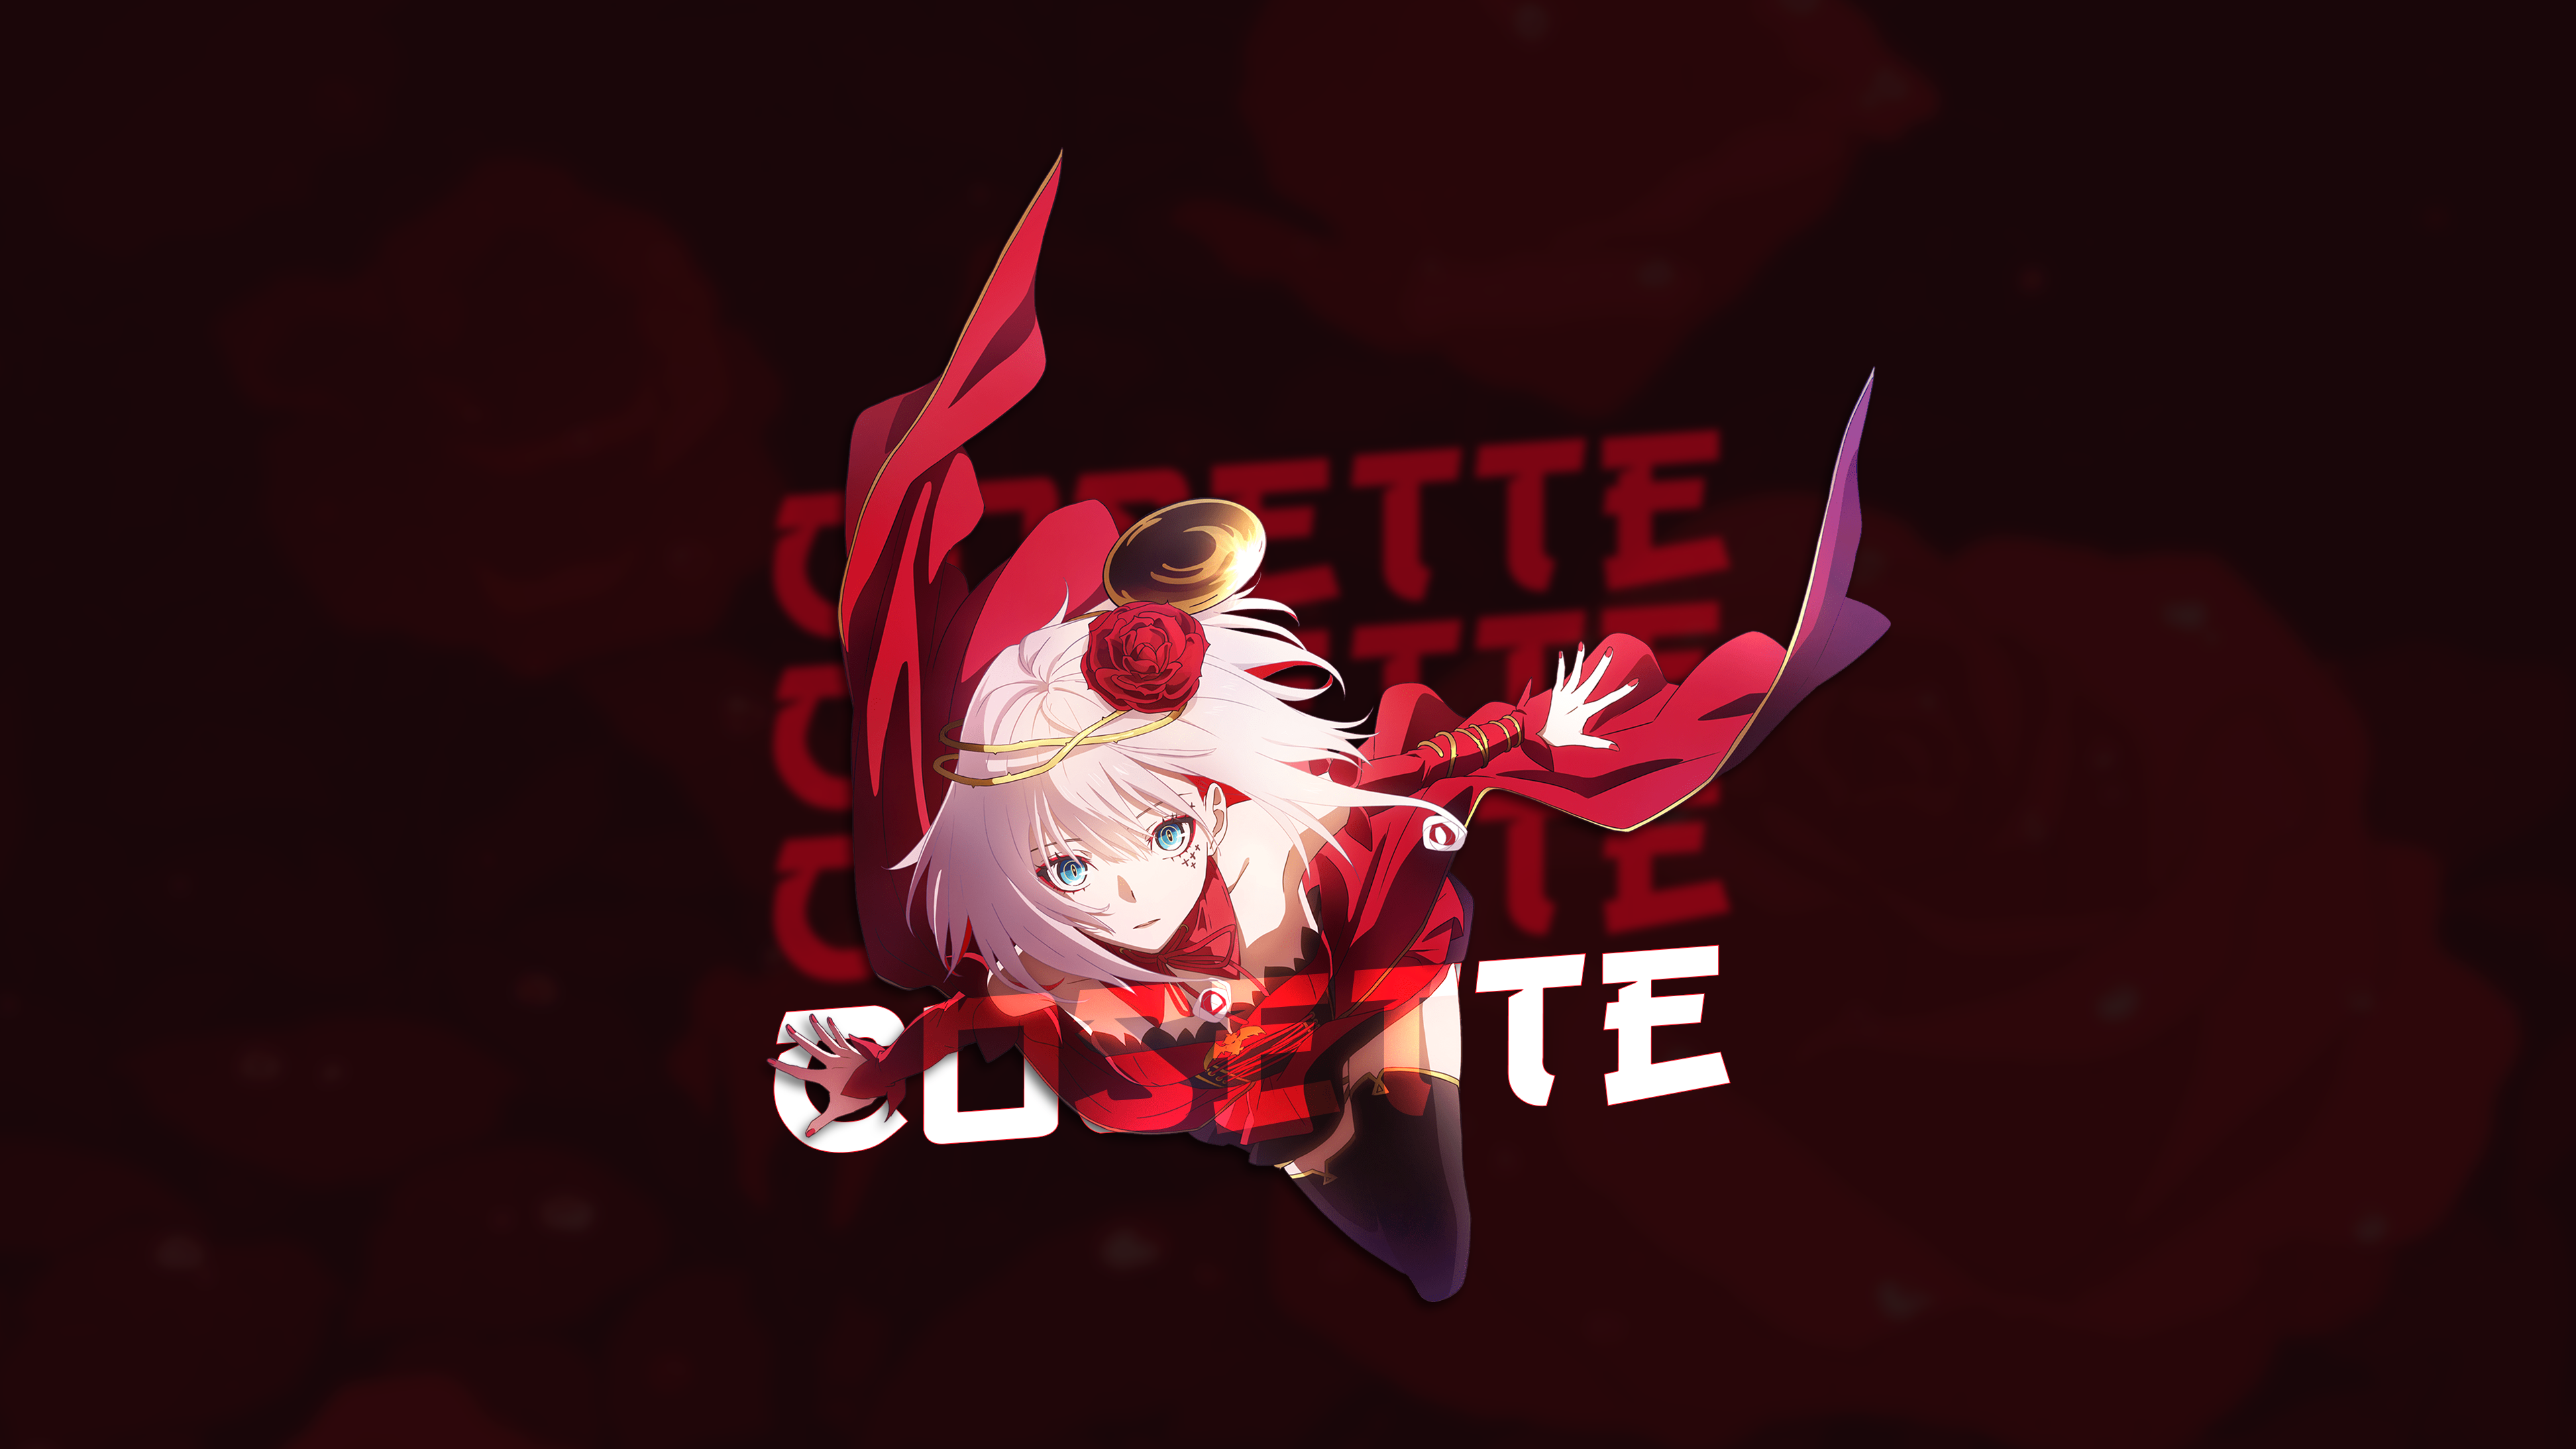 Cosette Takt Op Destiny 3840x2160